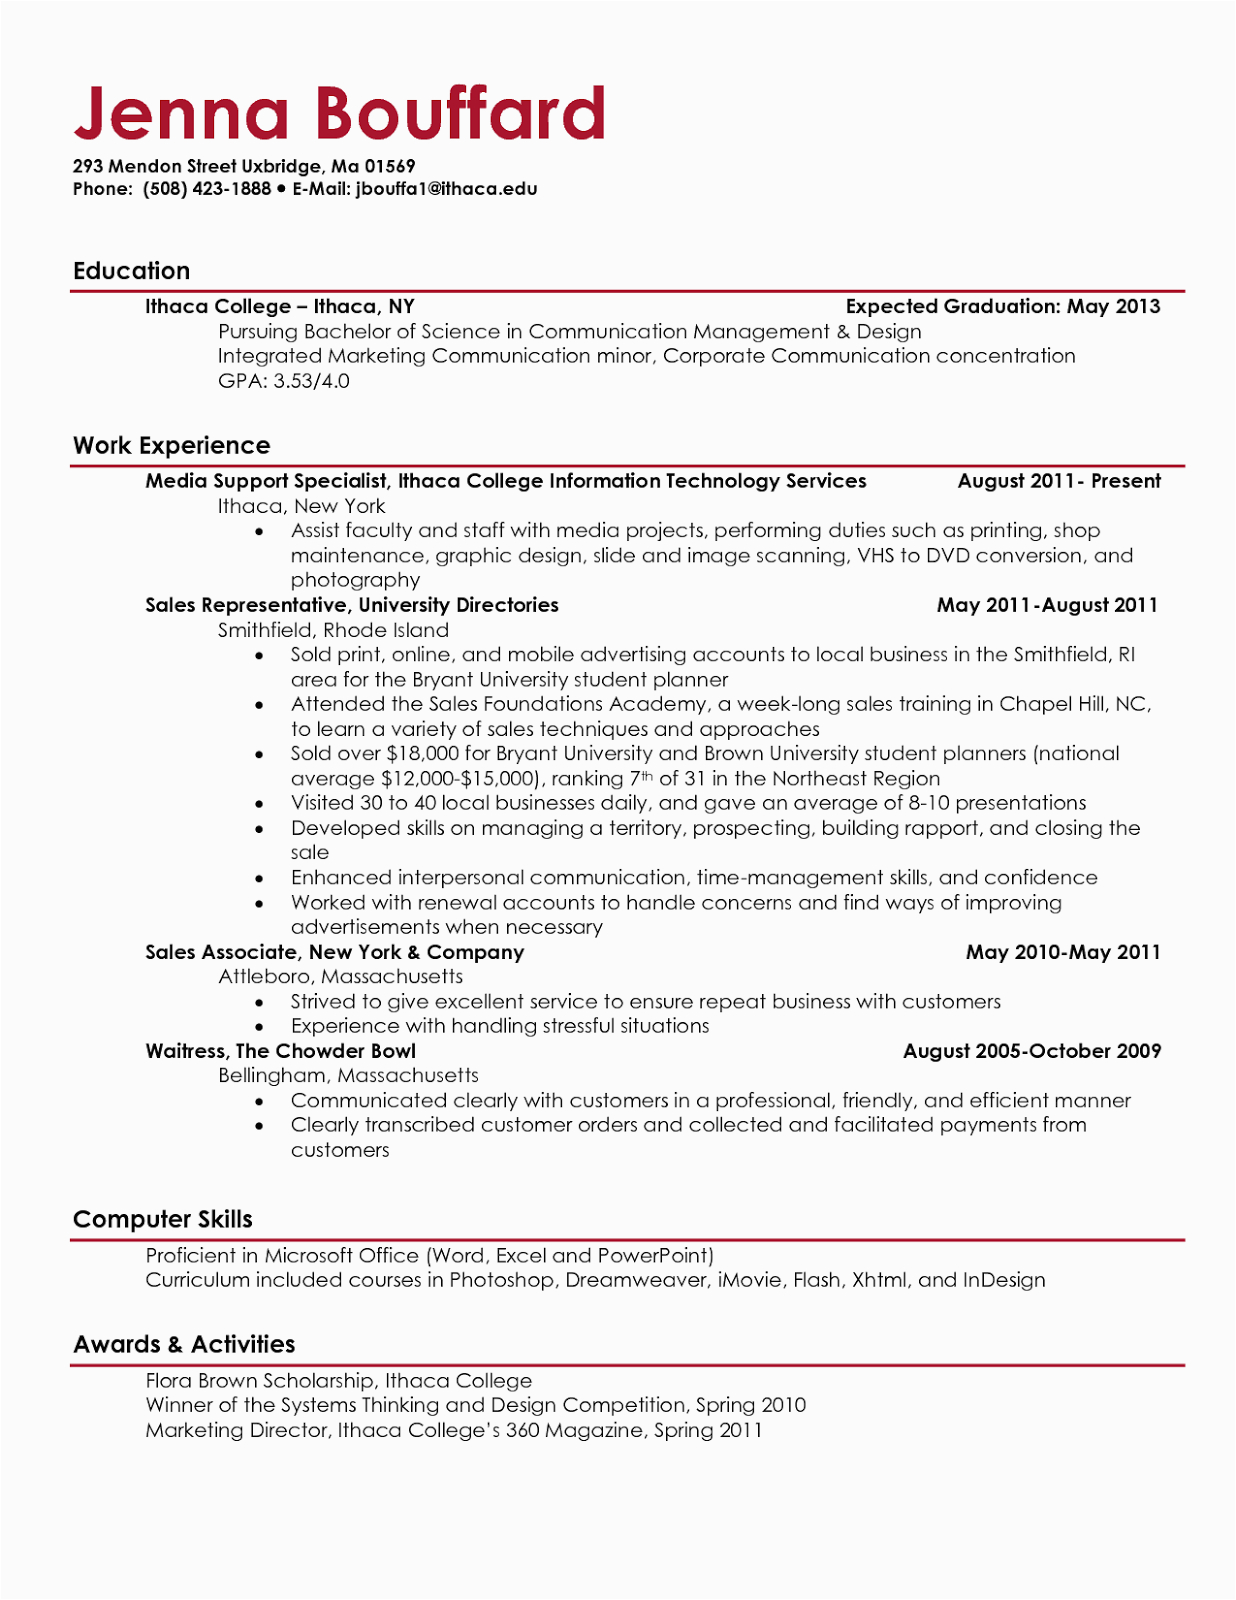 Sample Resume Objective for Undergraduate College Students Samples Of Resumes for College Students